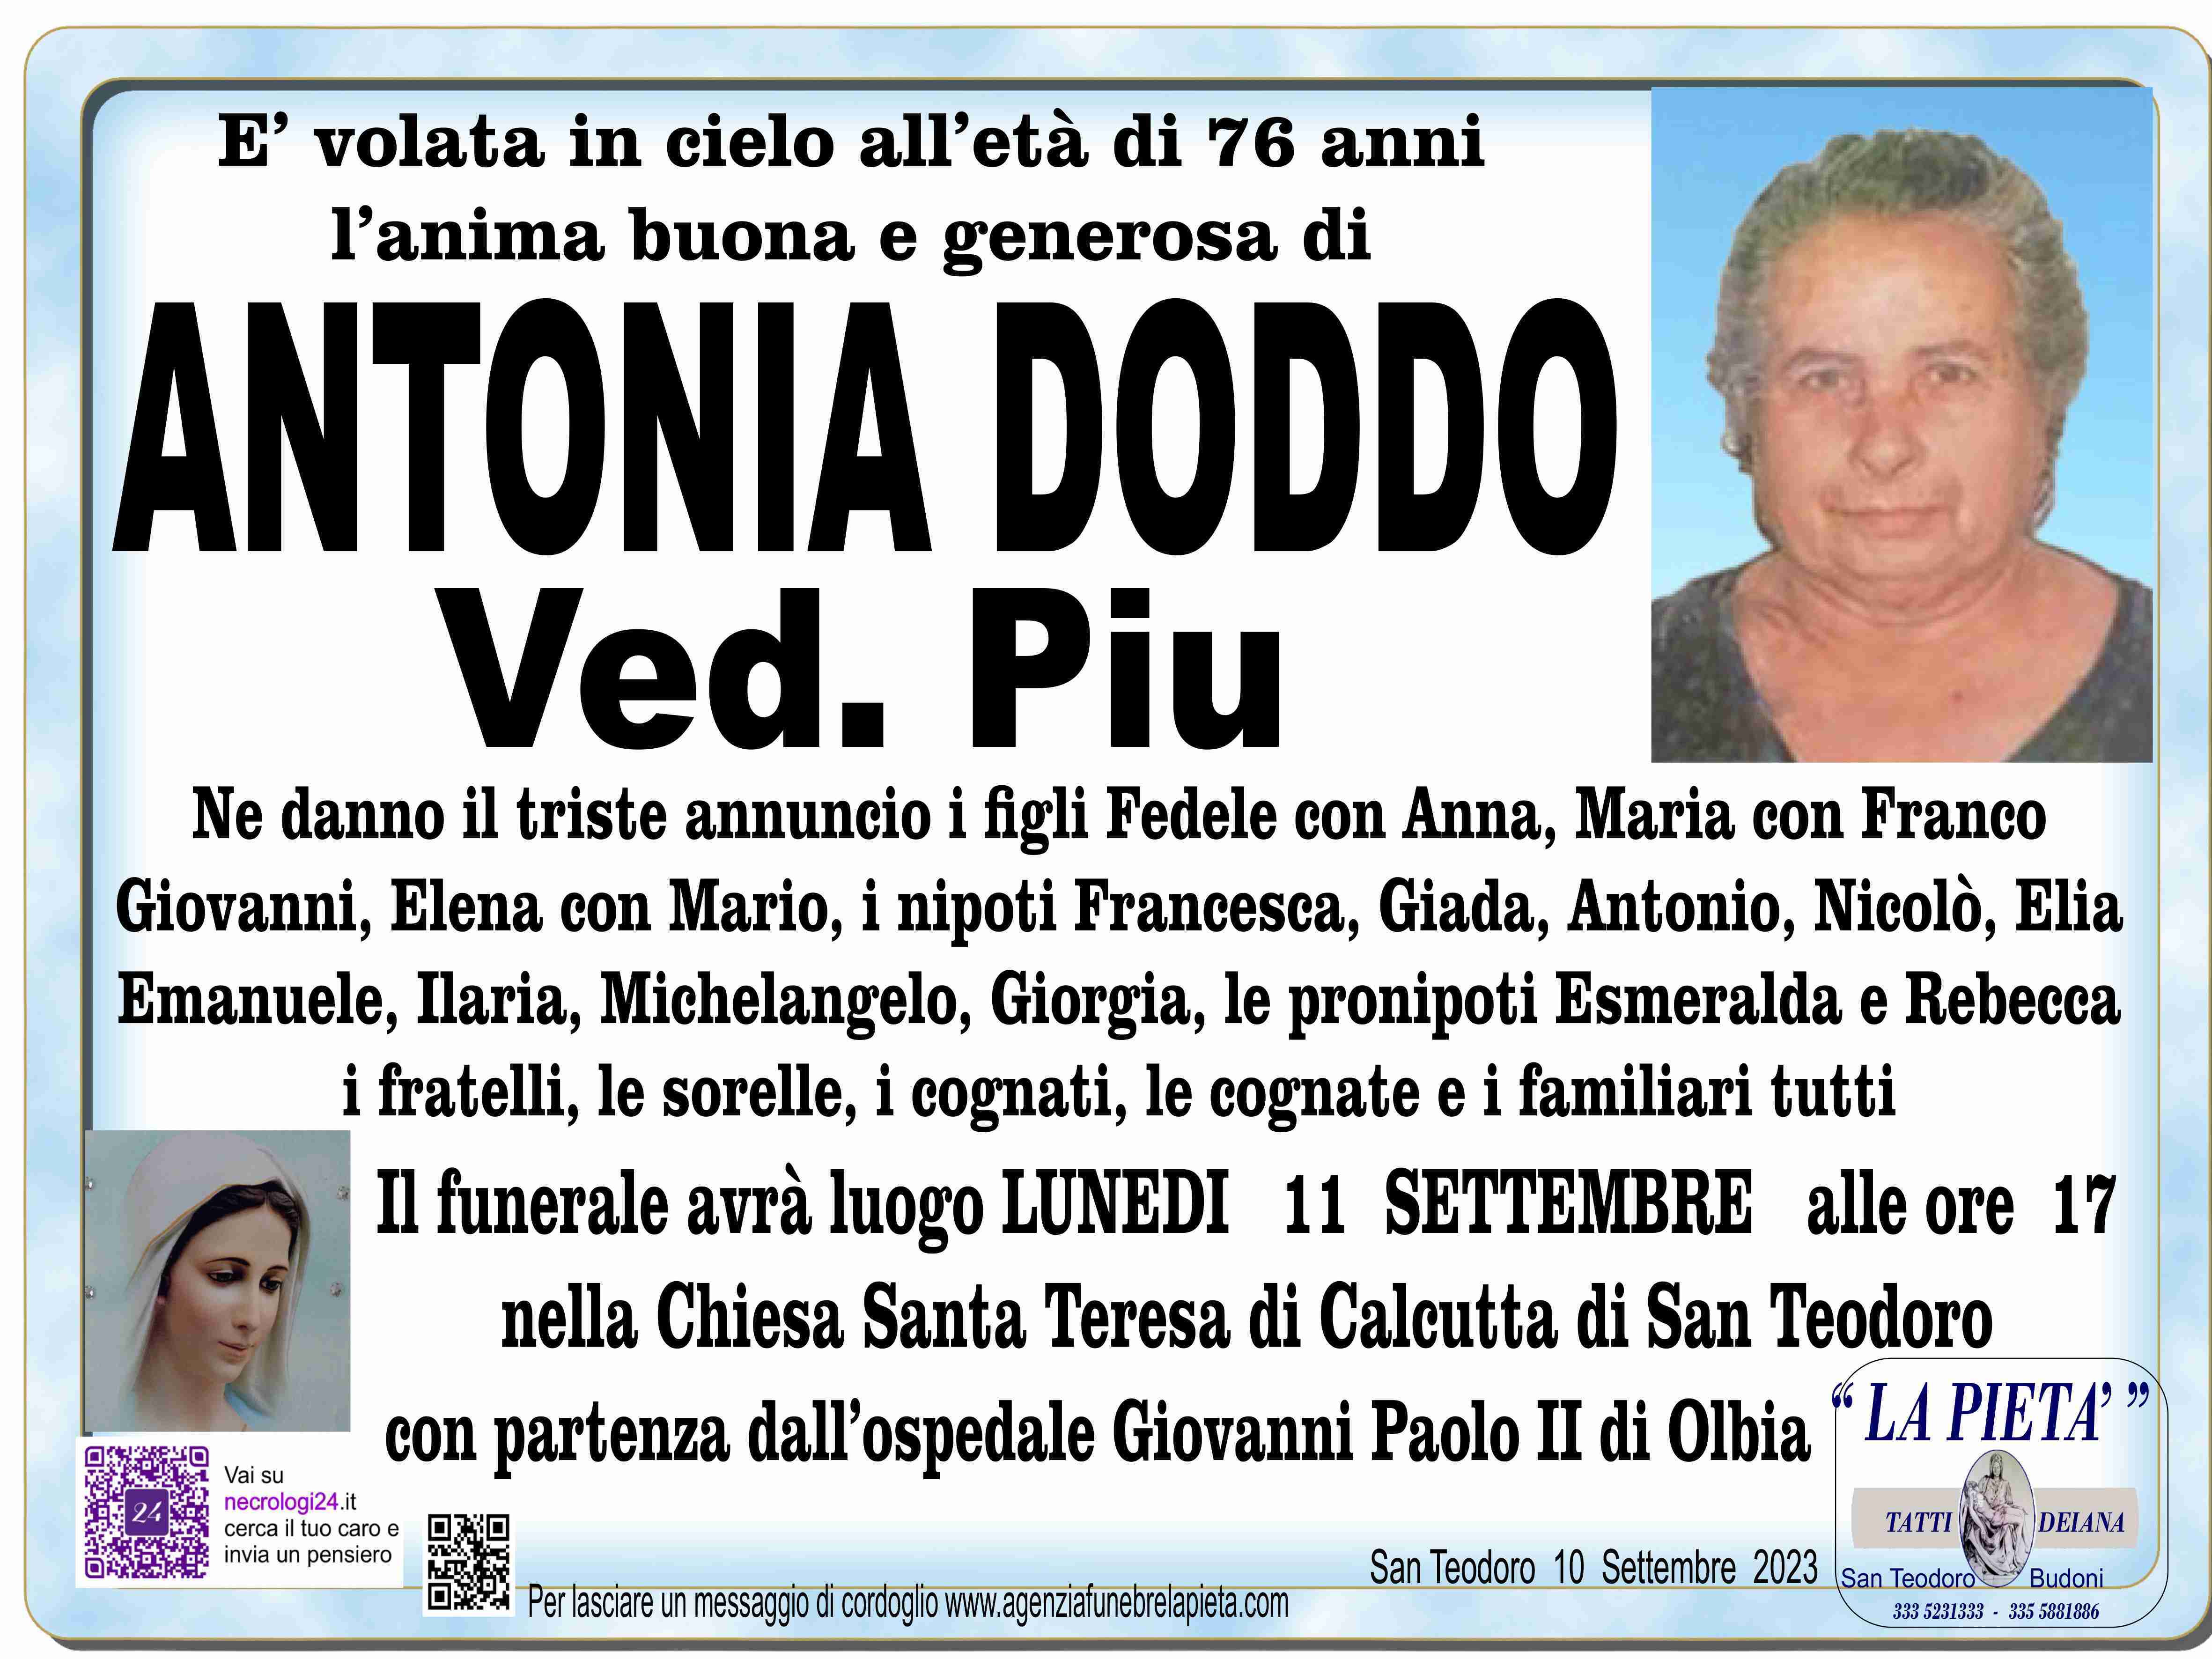 Antonia Doddo